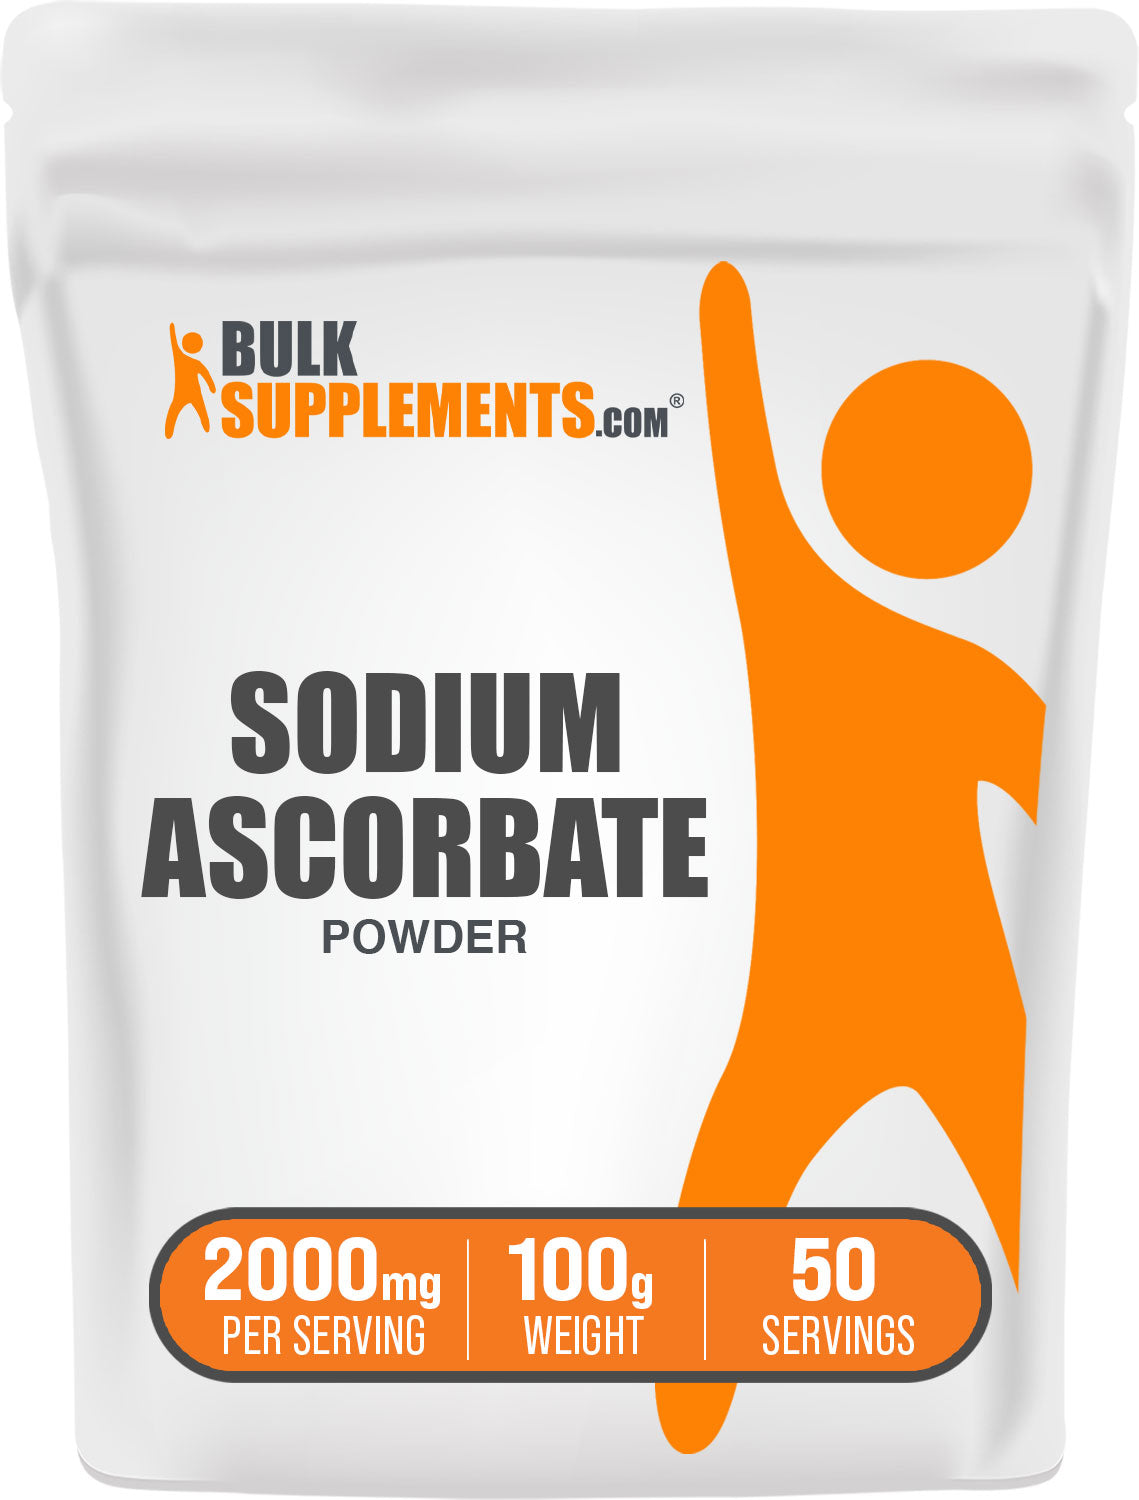 BulkSupplements.com Sodium Ascorbate Powder 100g bag